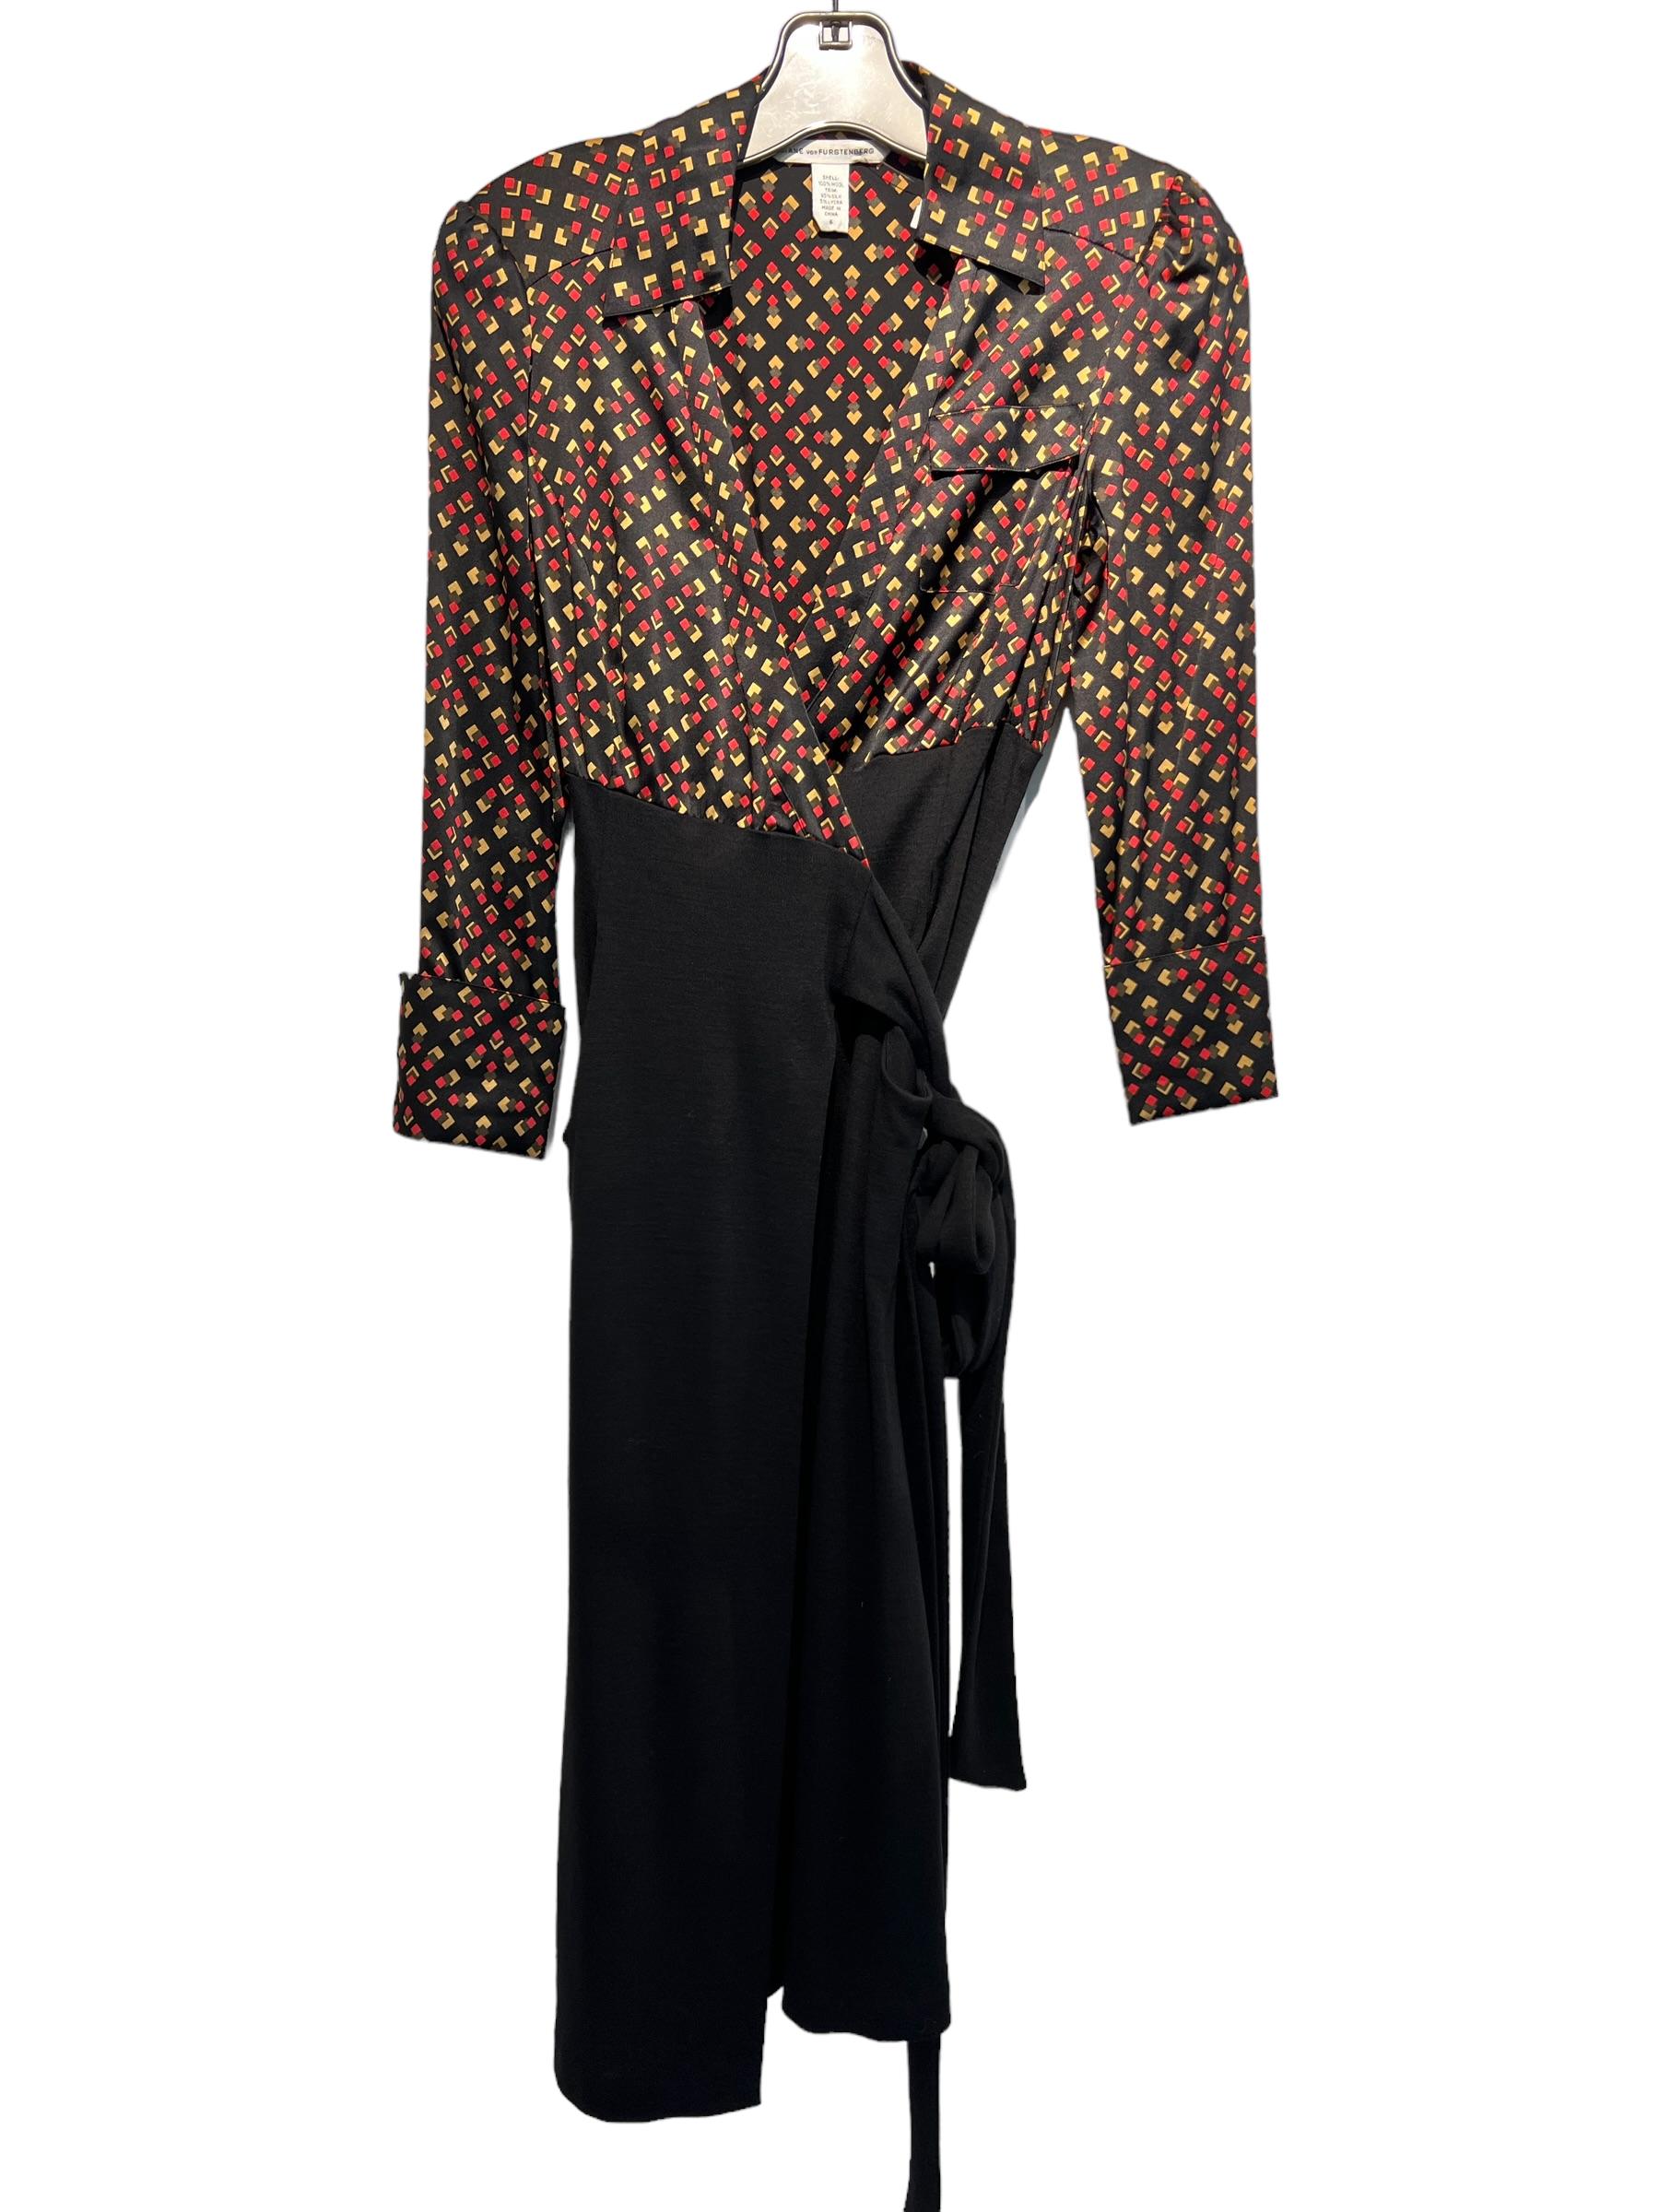 Diane Von Furstenberg Black and White Wool Long Sleeve Dress, Silk top and Black Bottom Knit 